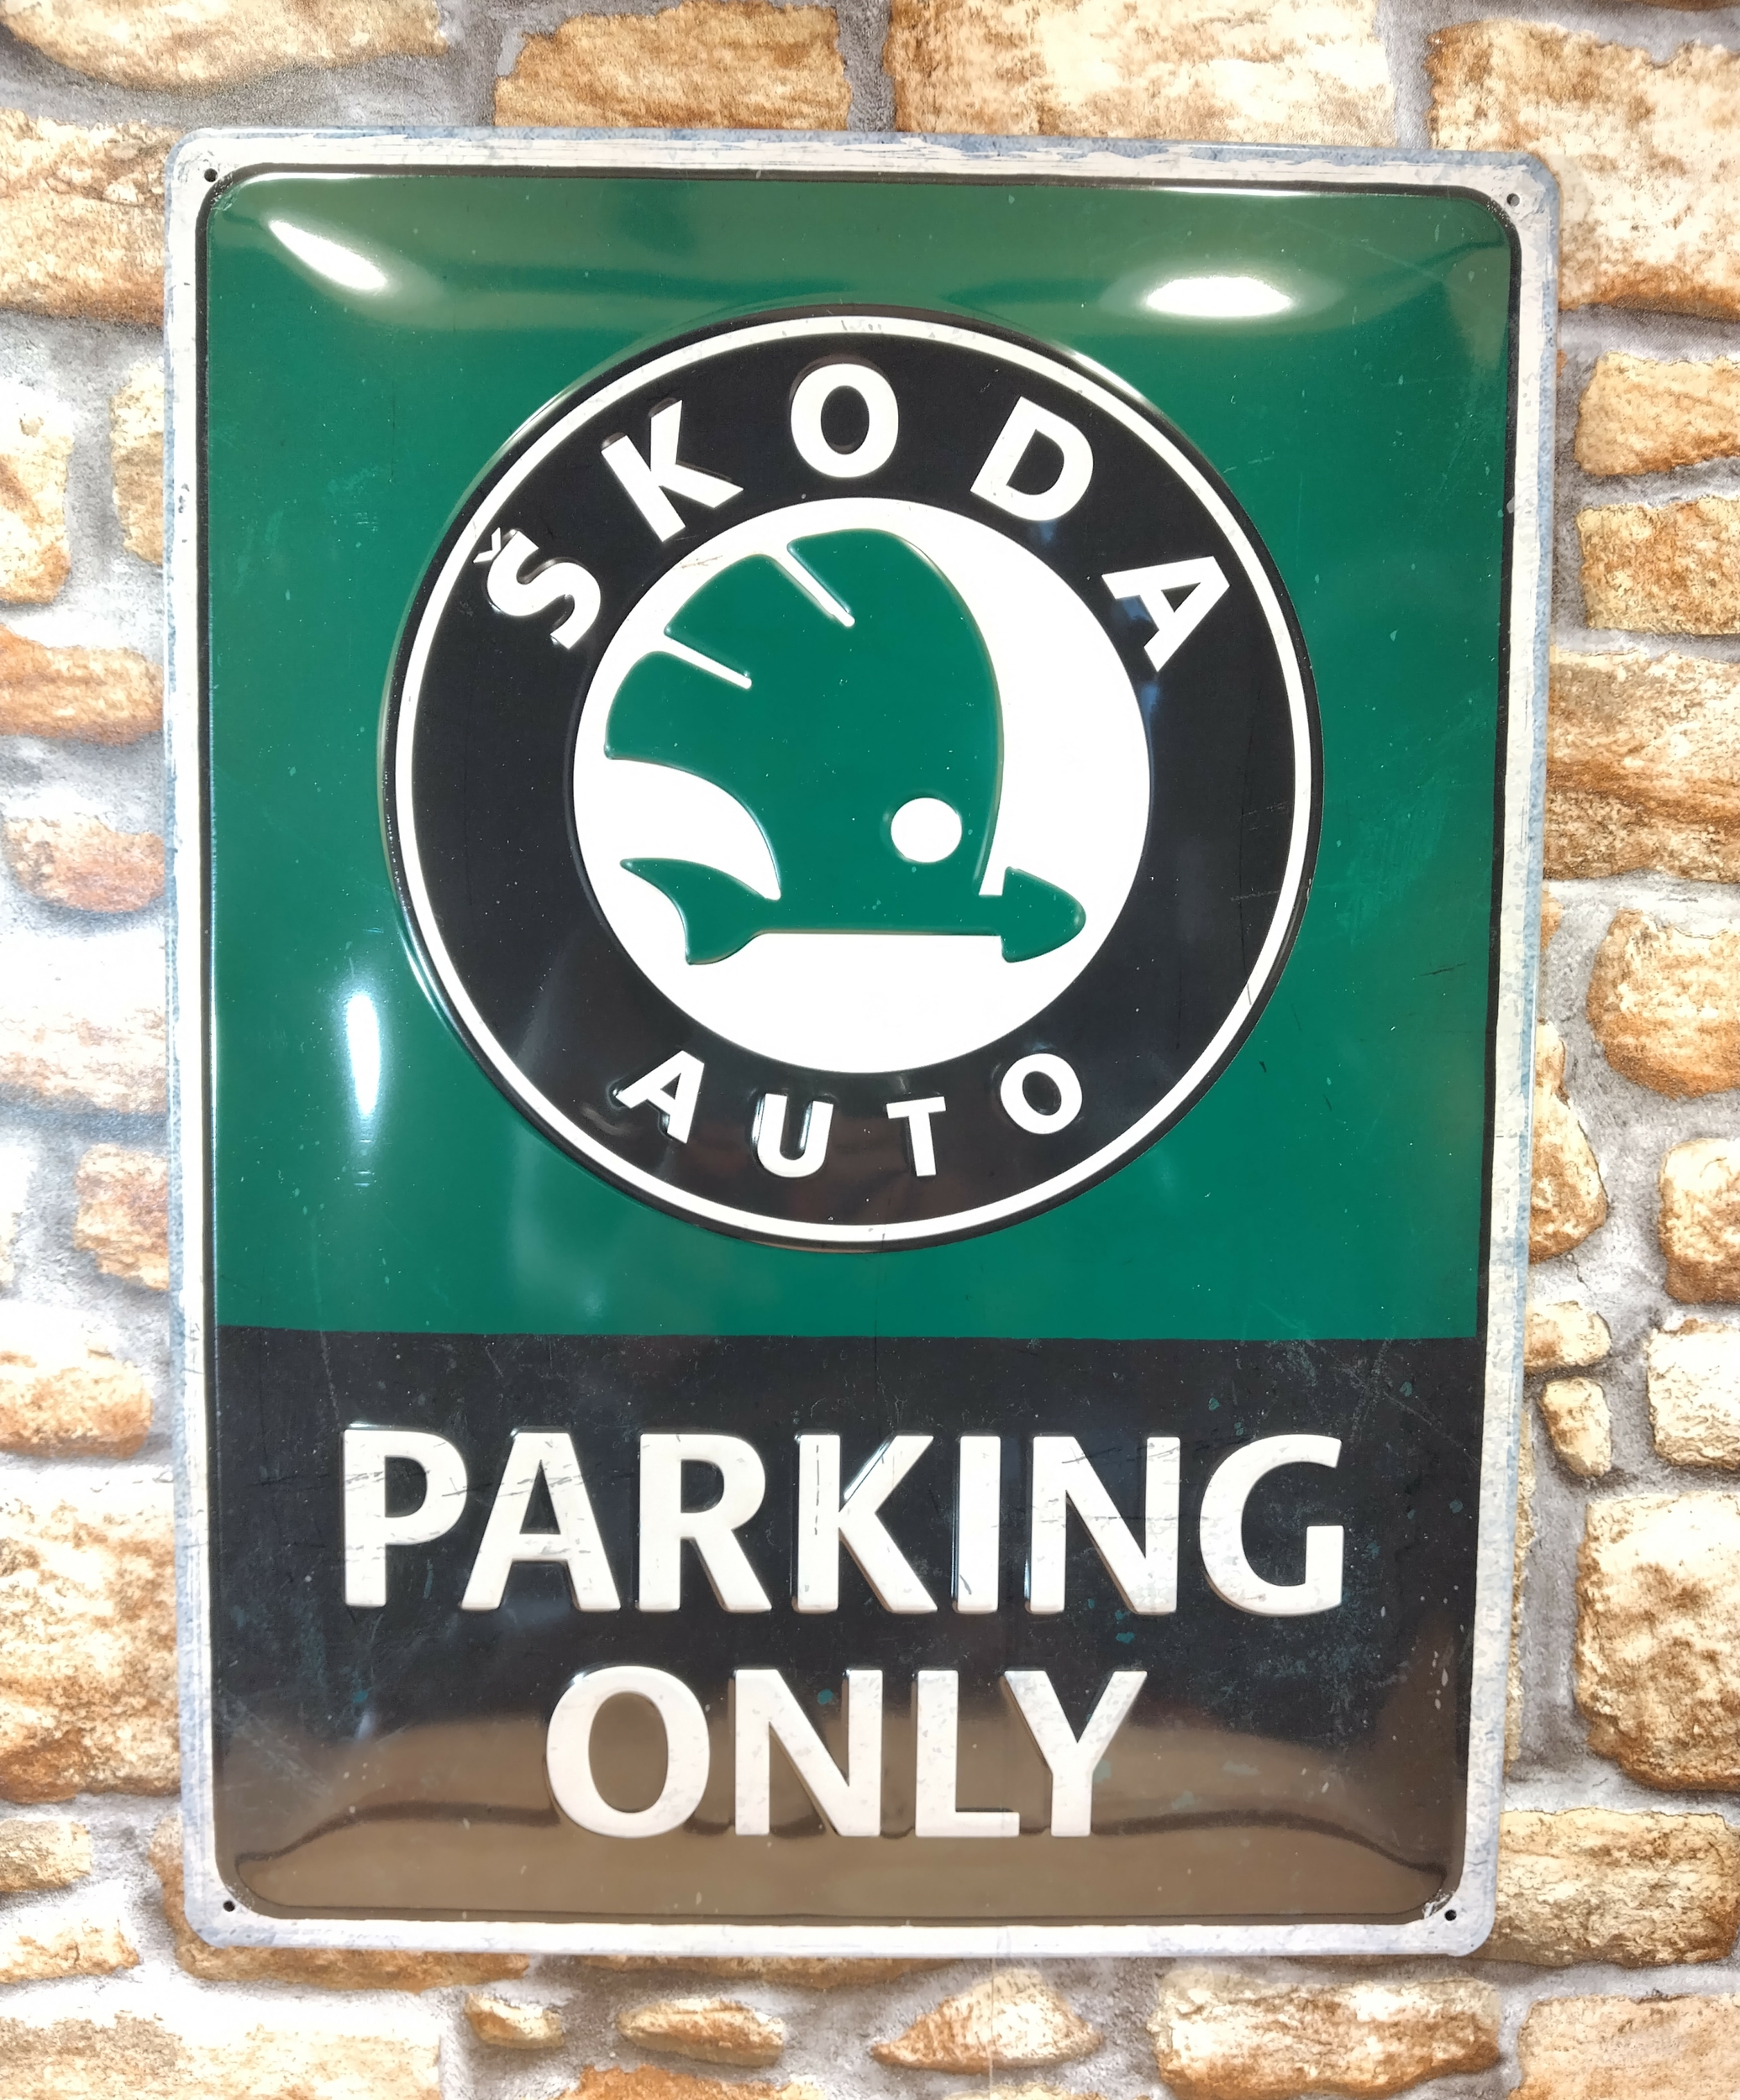 plaque publicitaire skoda parking only